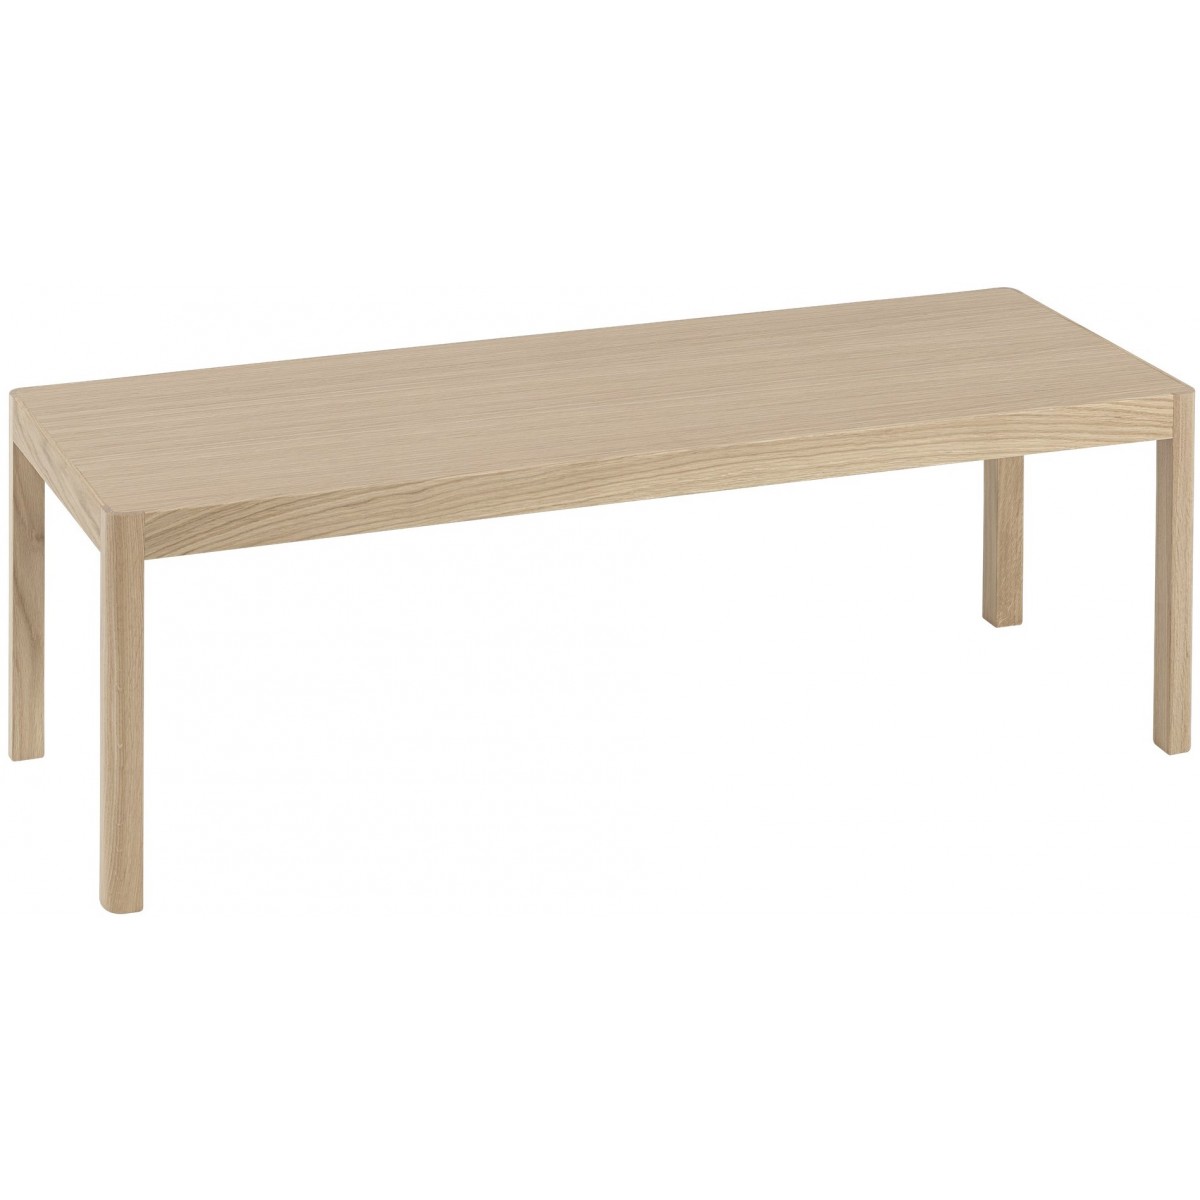 120 x 43 cm - oak - Workshop coffee table